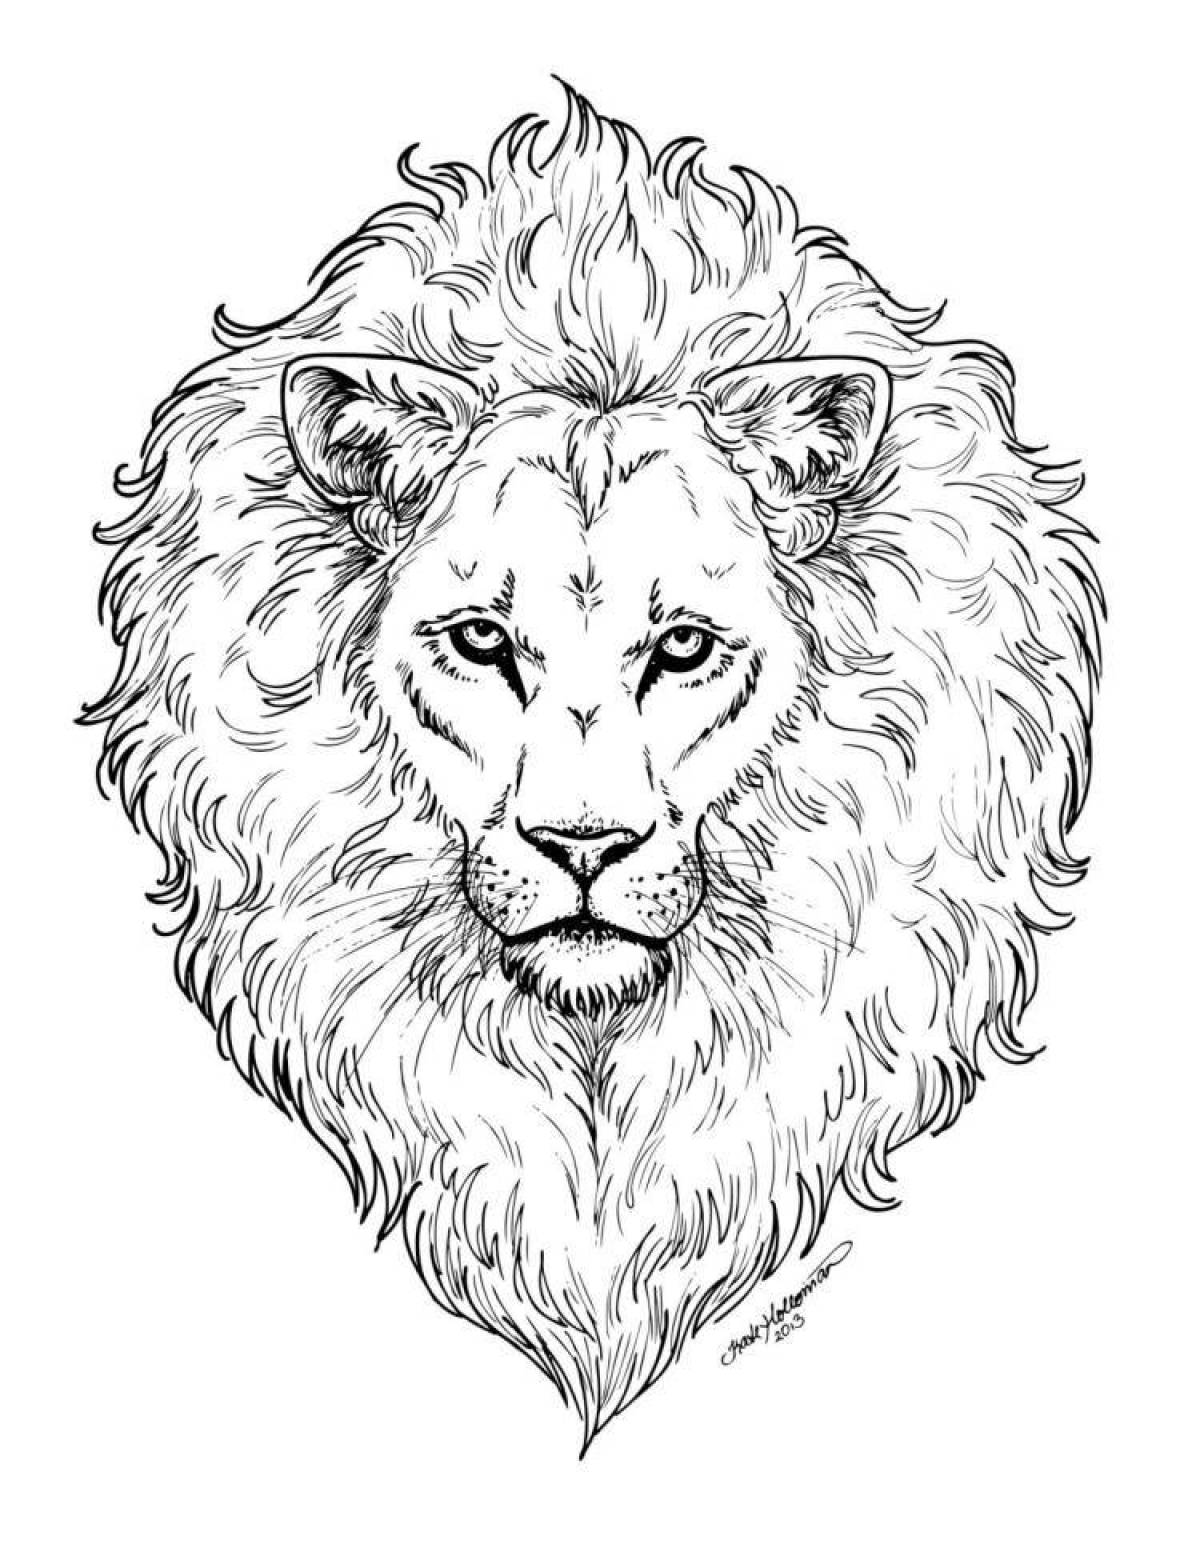 Coloring book shining lion head